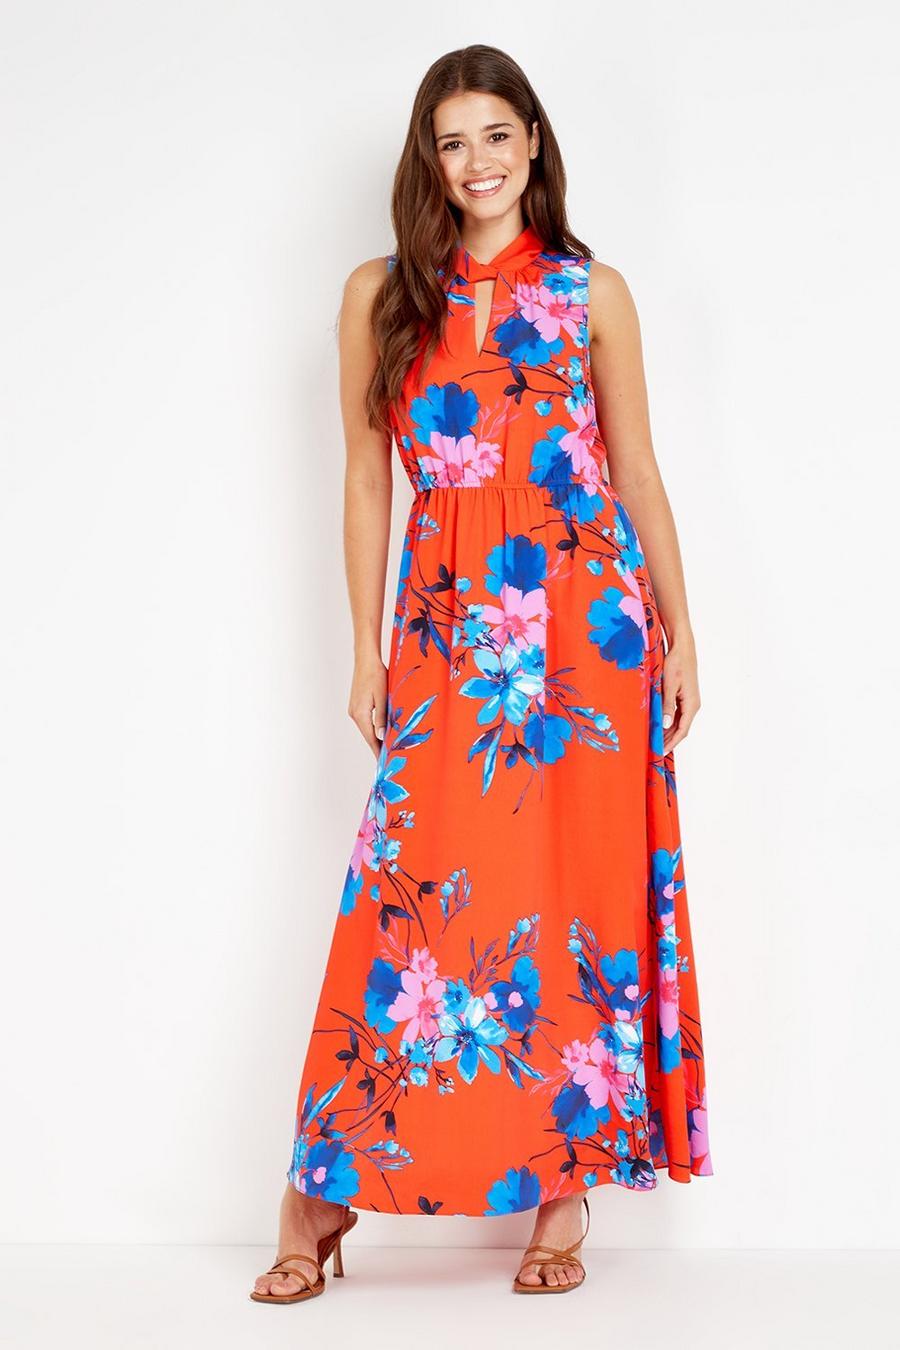 Red and Blue Floral Halter Dress